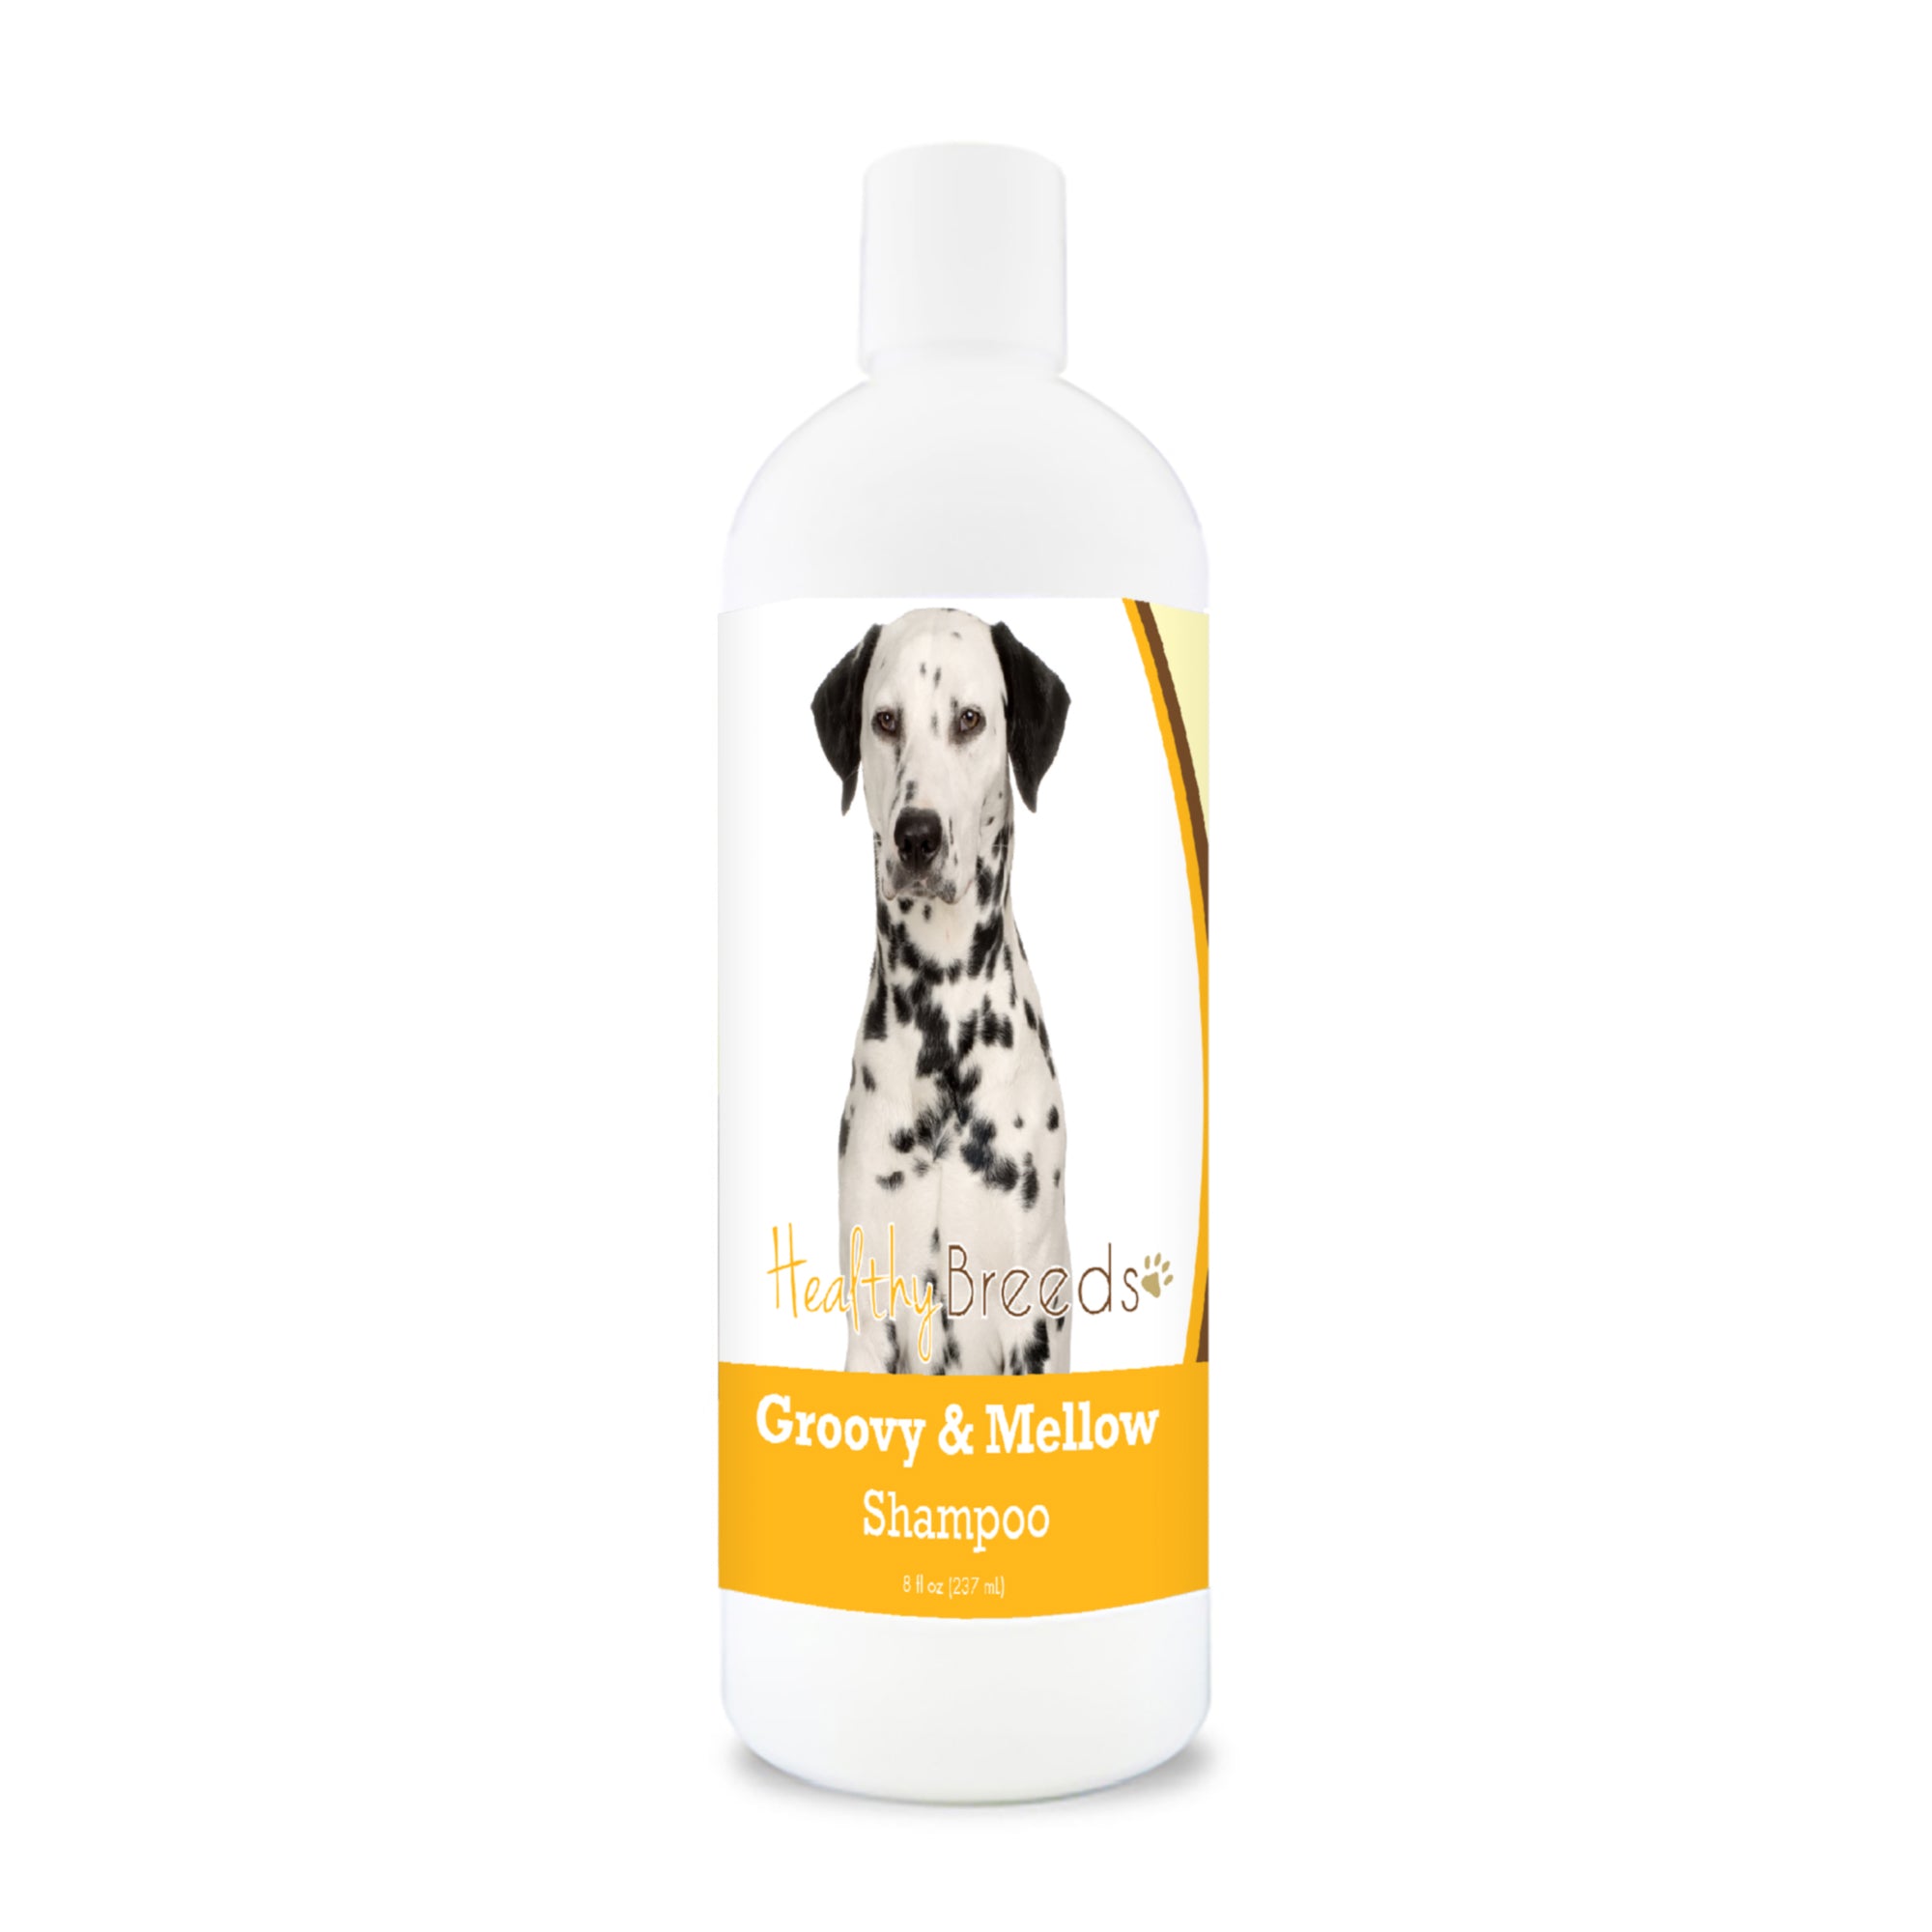 Dalmatian Groovy & Mellow Shampoo 8 oz